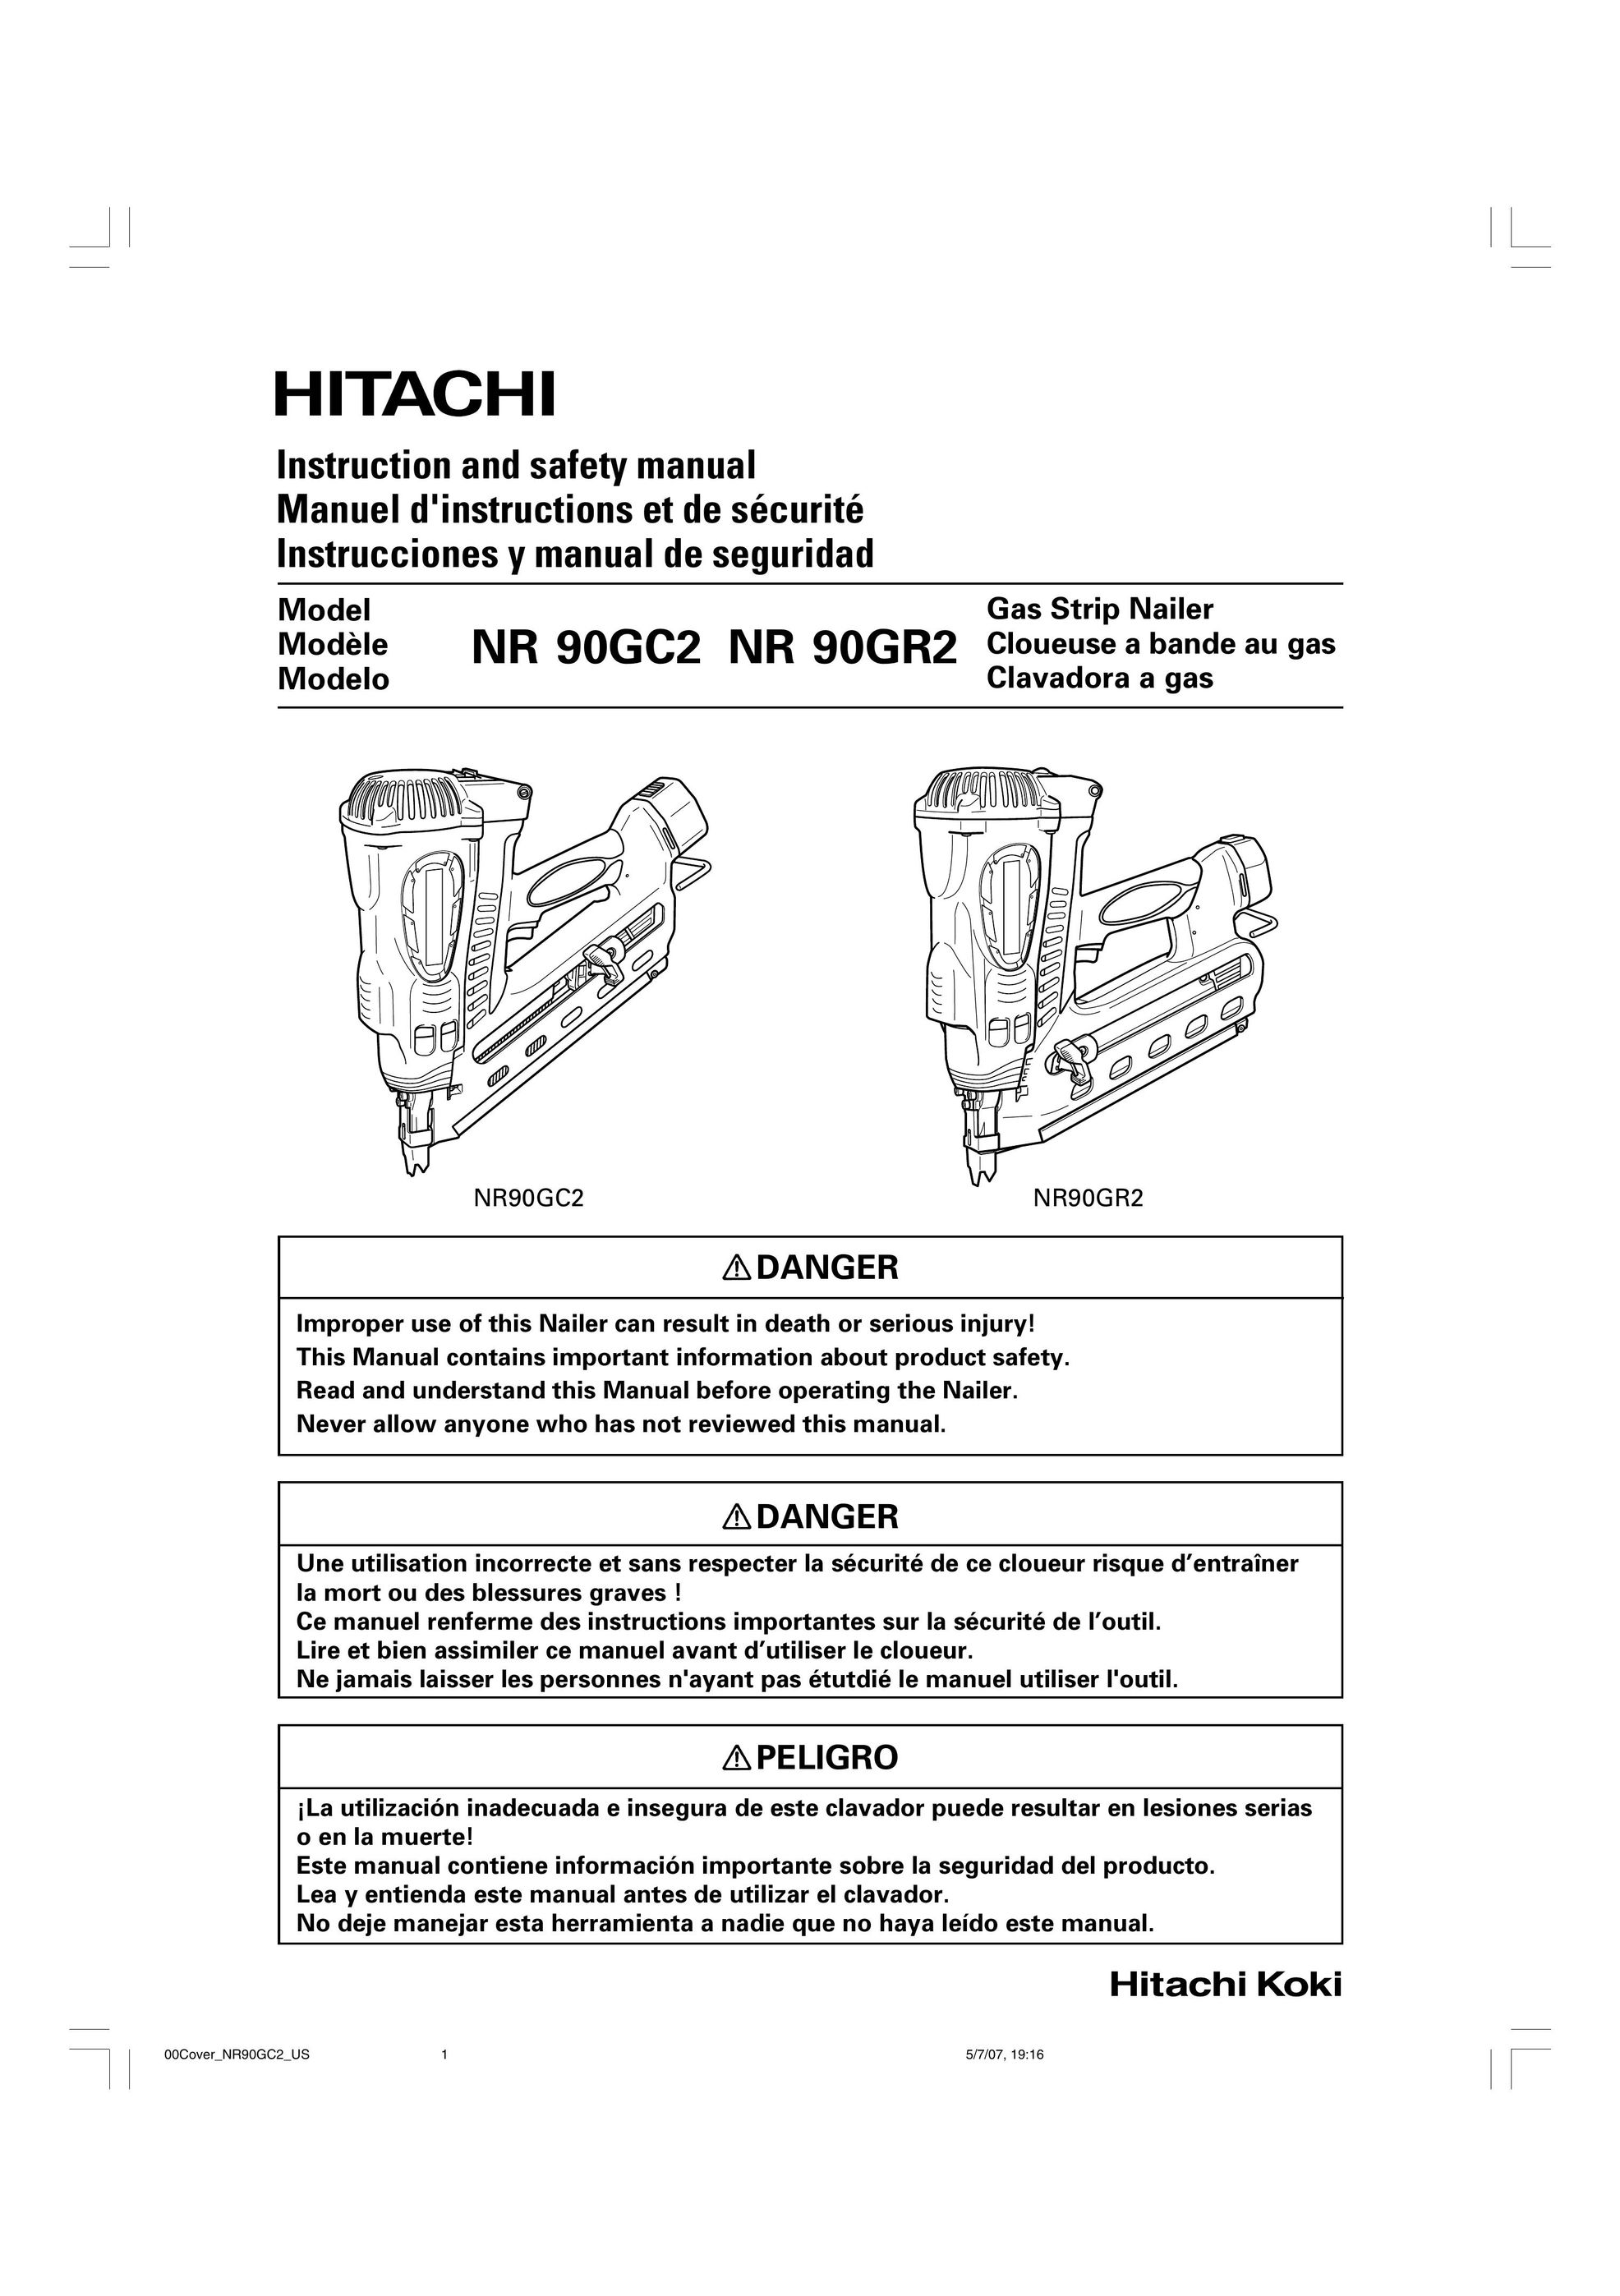 Hitachi NR 90GR2 Nail Gun User Manual